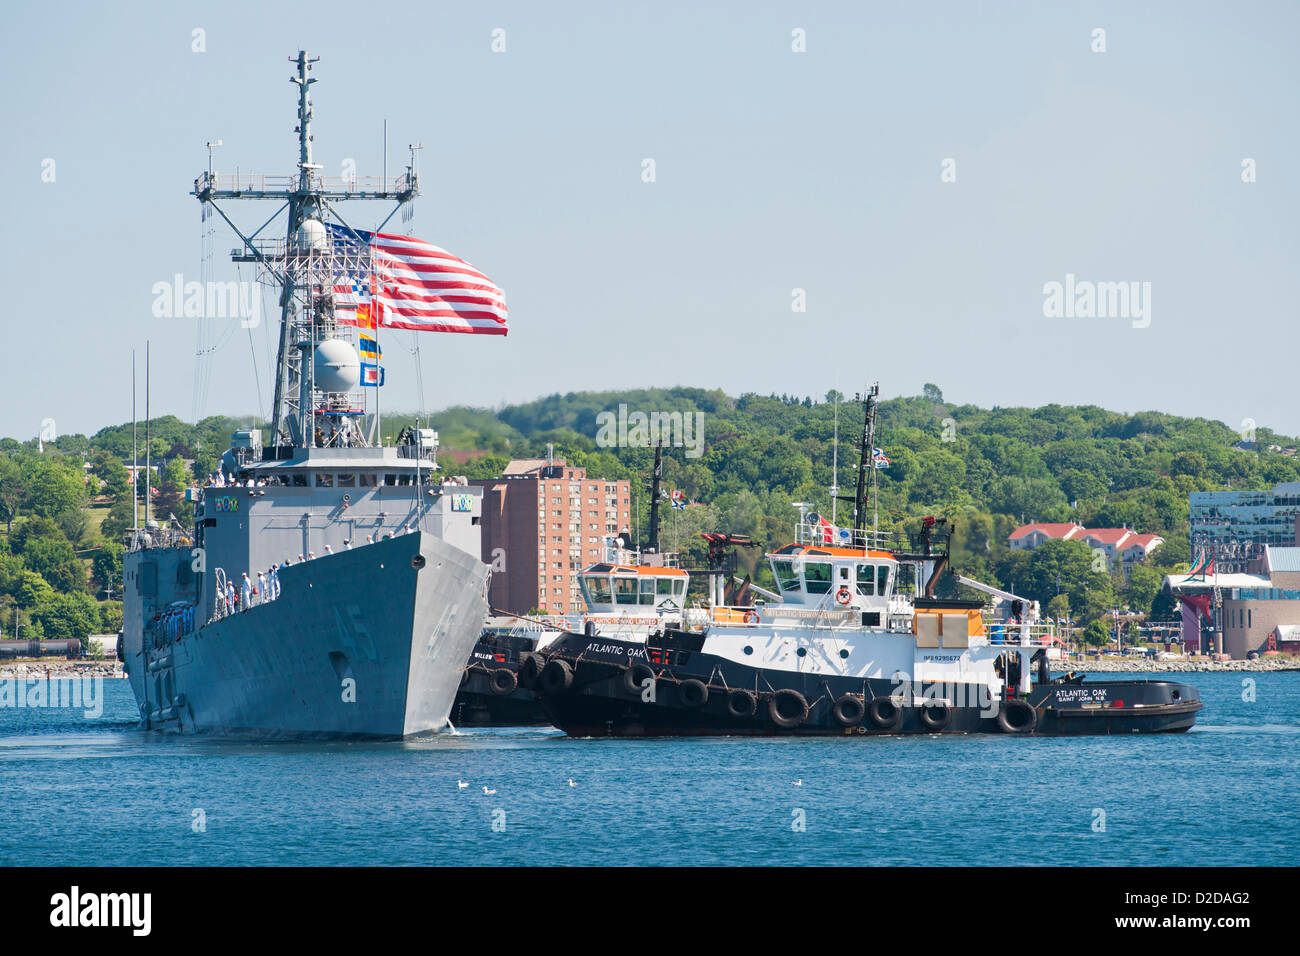 The US Navy frigate De Wert departs Halifax, Nova Scotia, Canada. Stock Photo